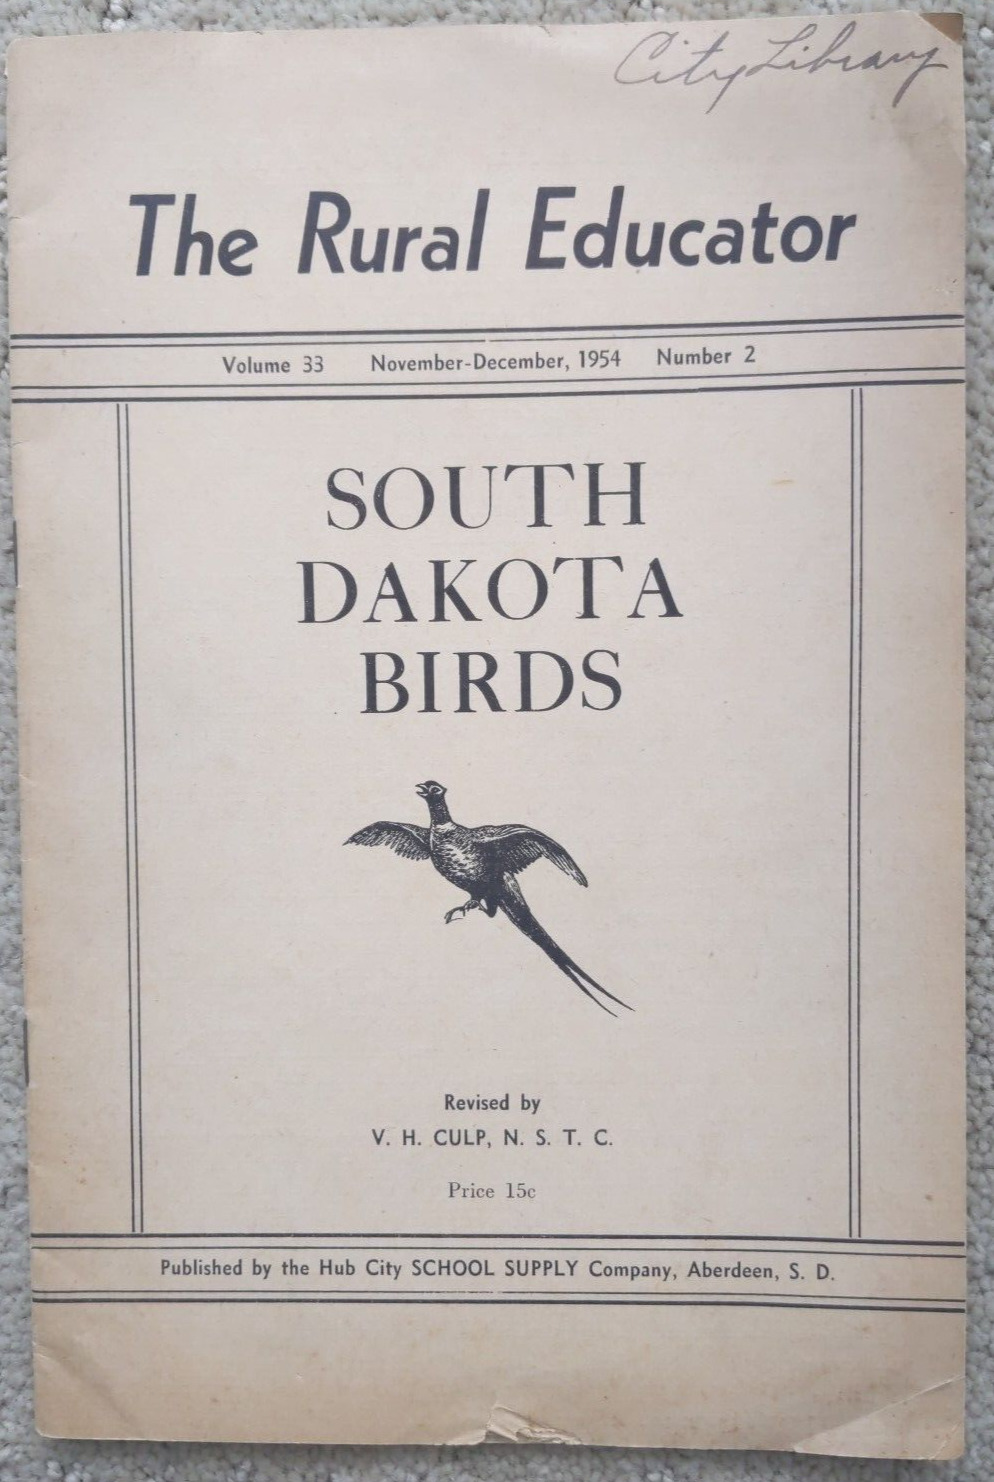 The Rural Educator, SOUTH DAKOTA BIRDS, Nov-Dec 1954